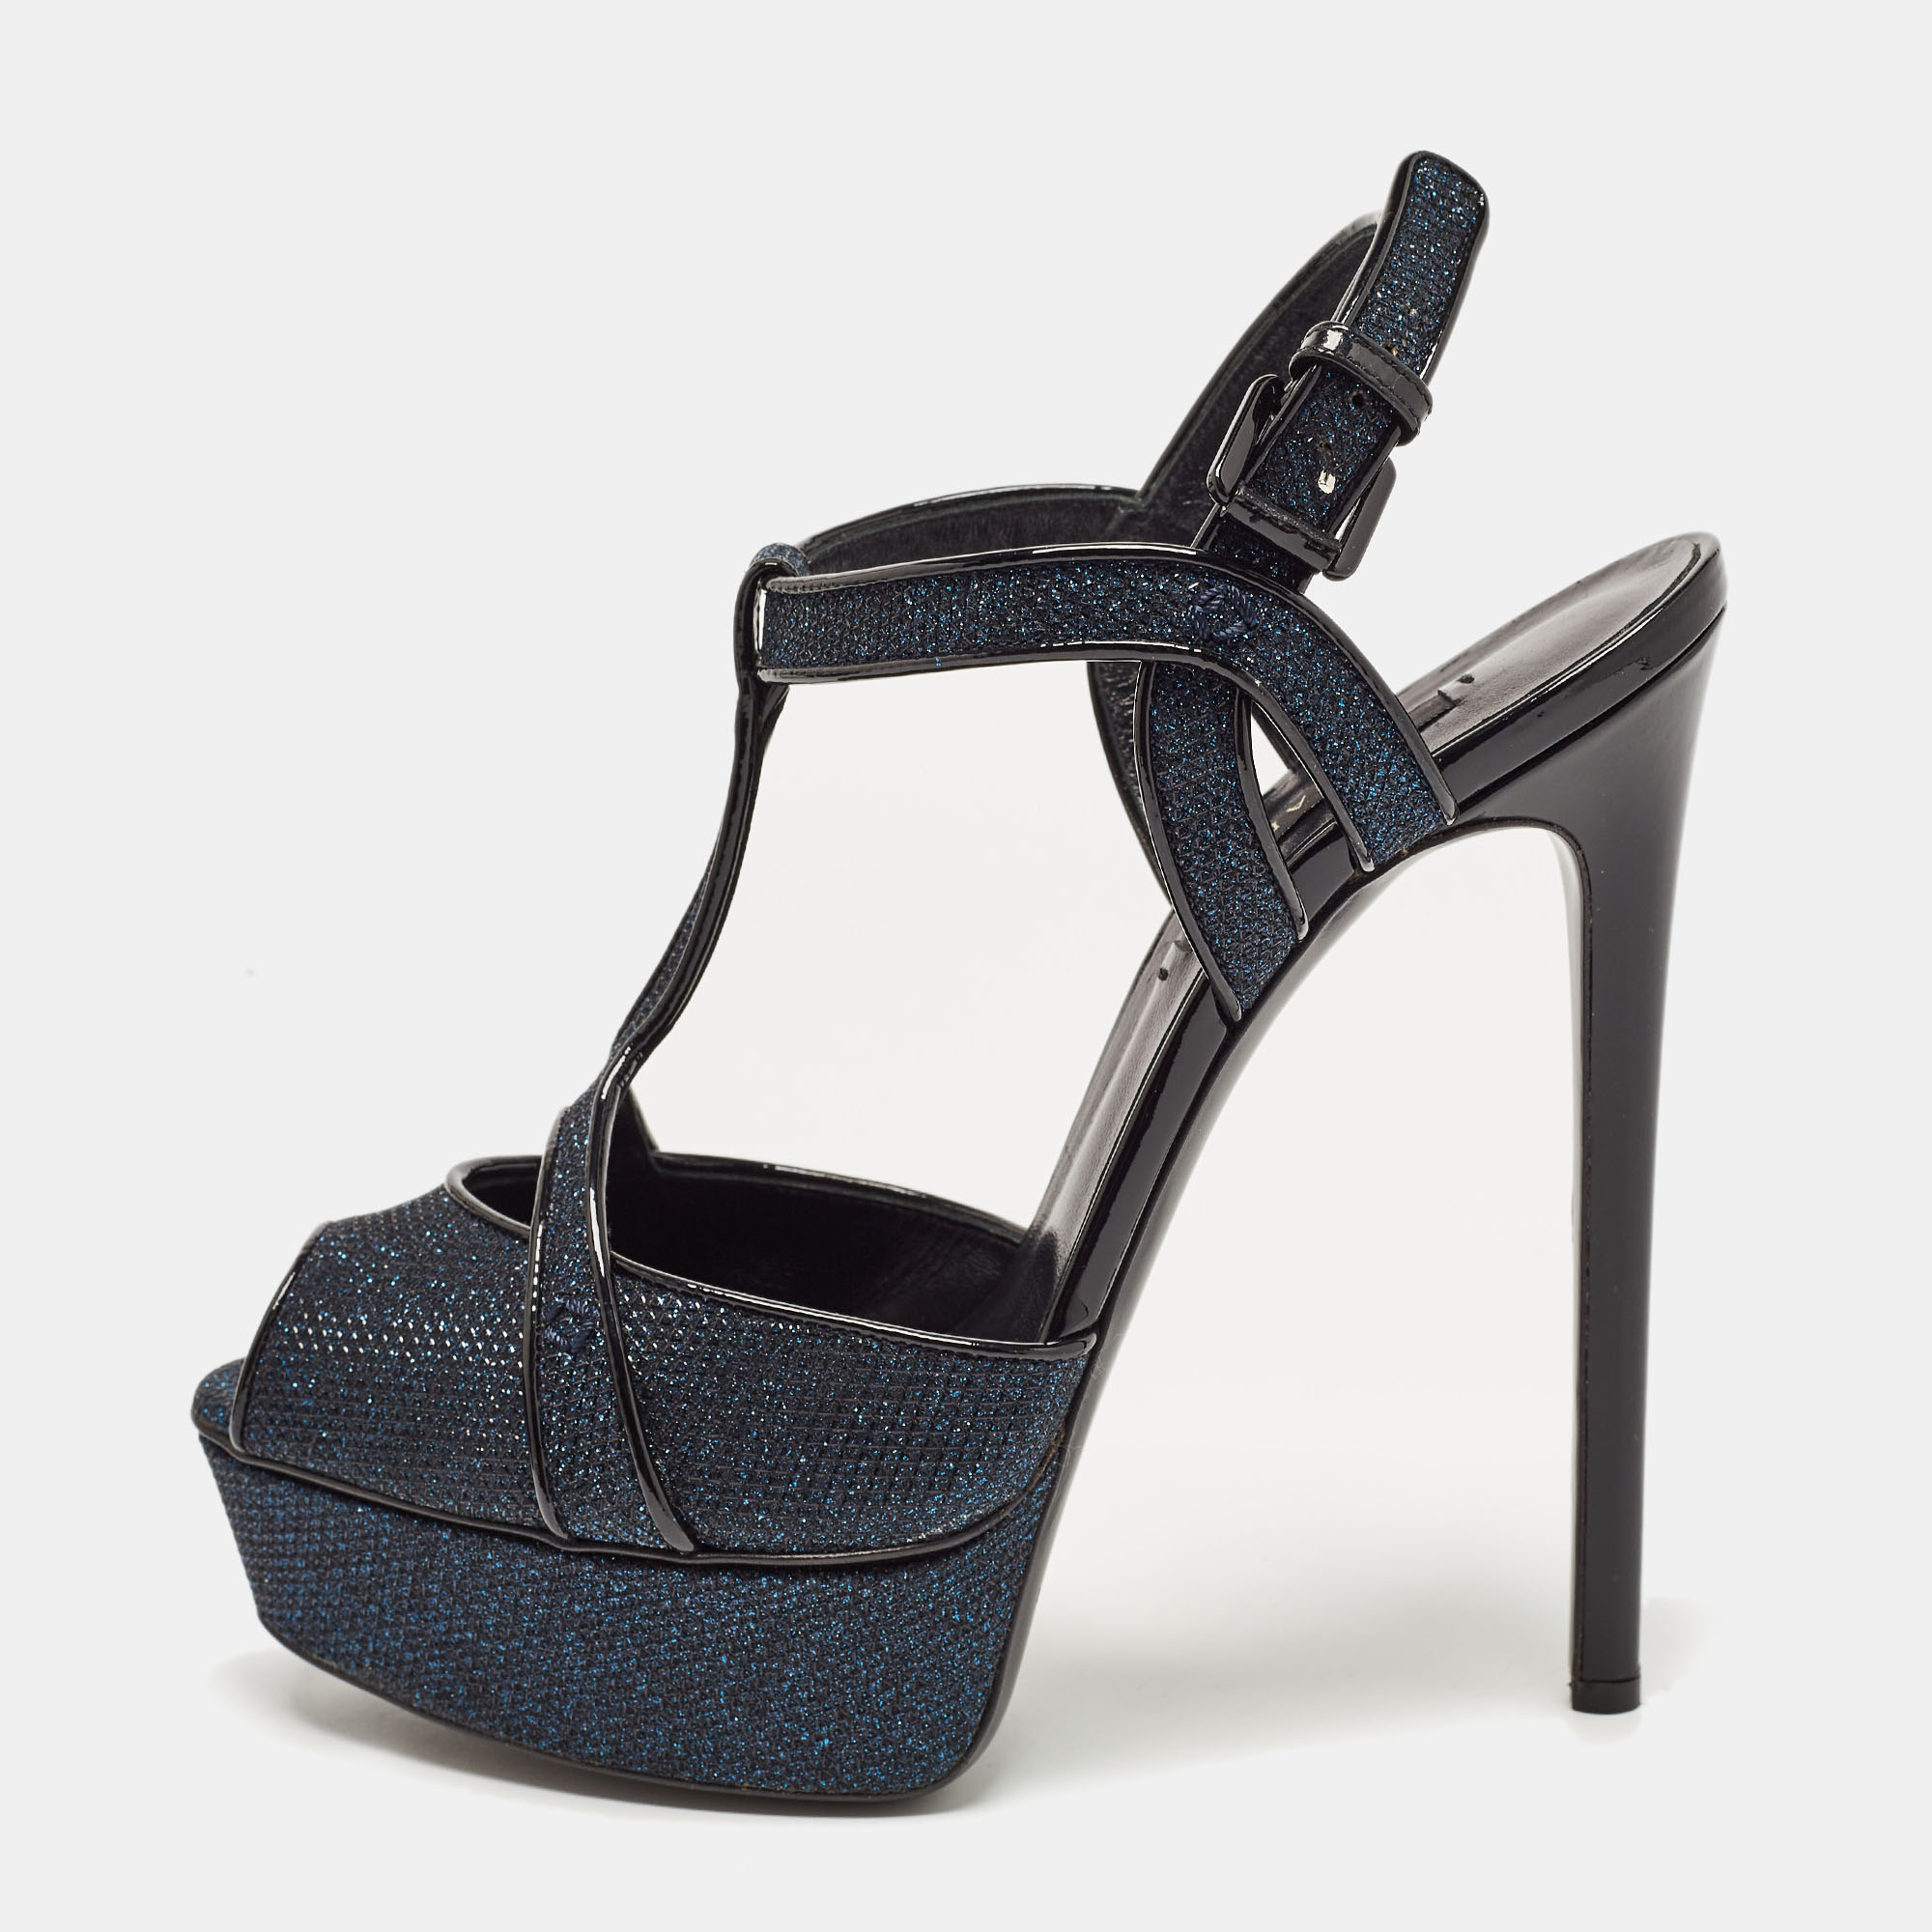 Casadei navy blue/black glitter and patent leather platform sandals size 40